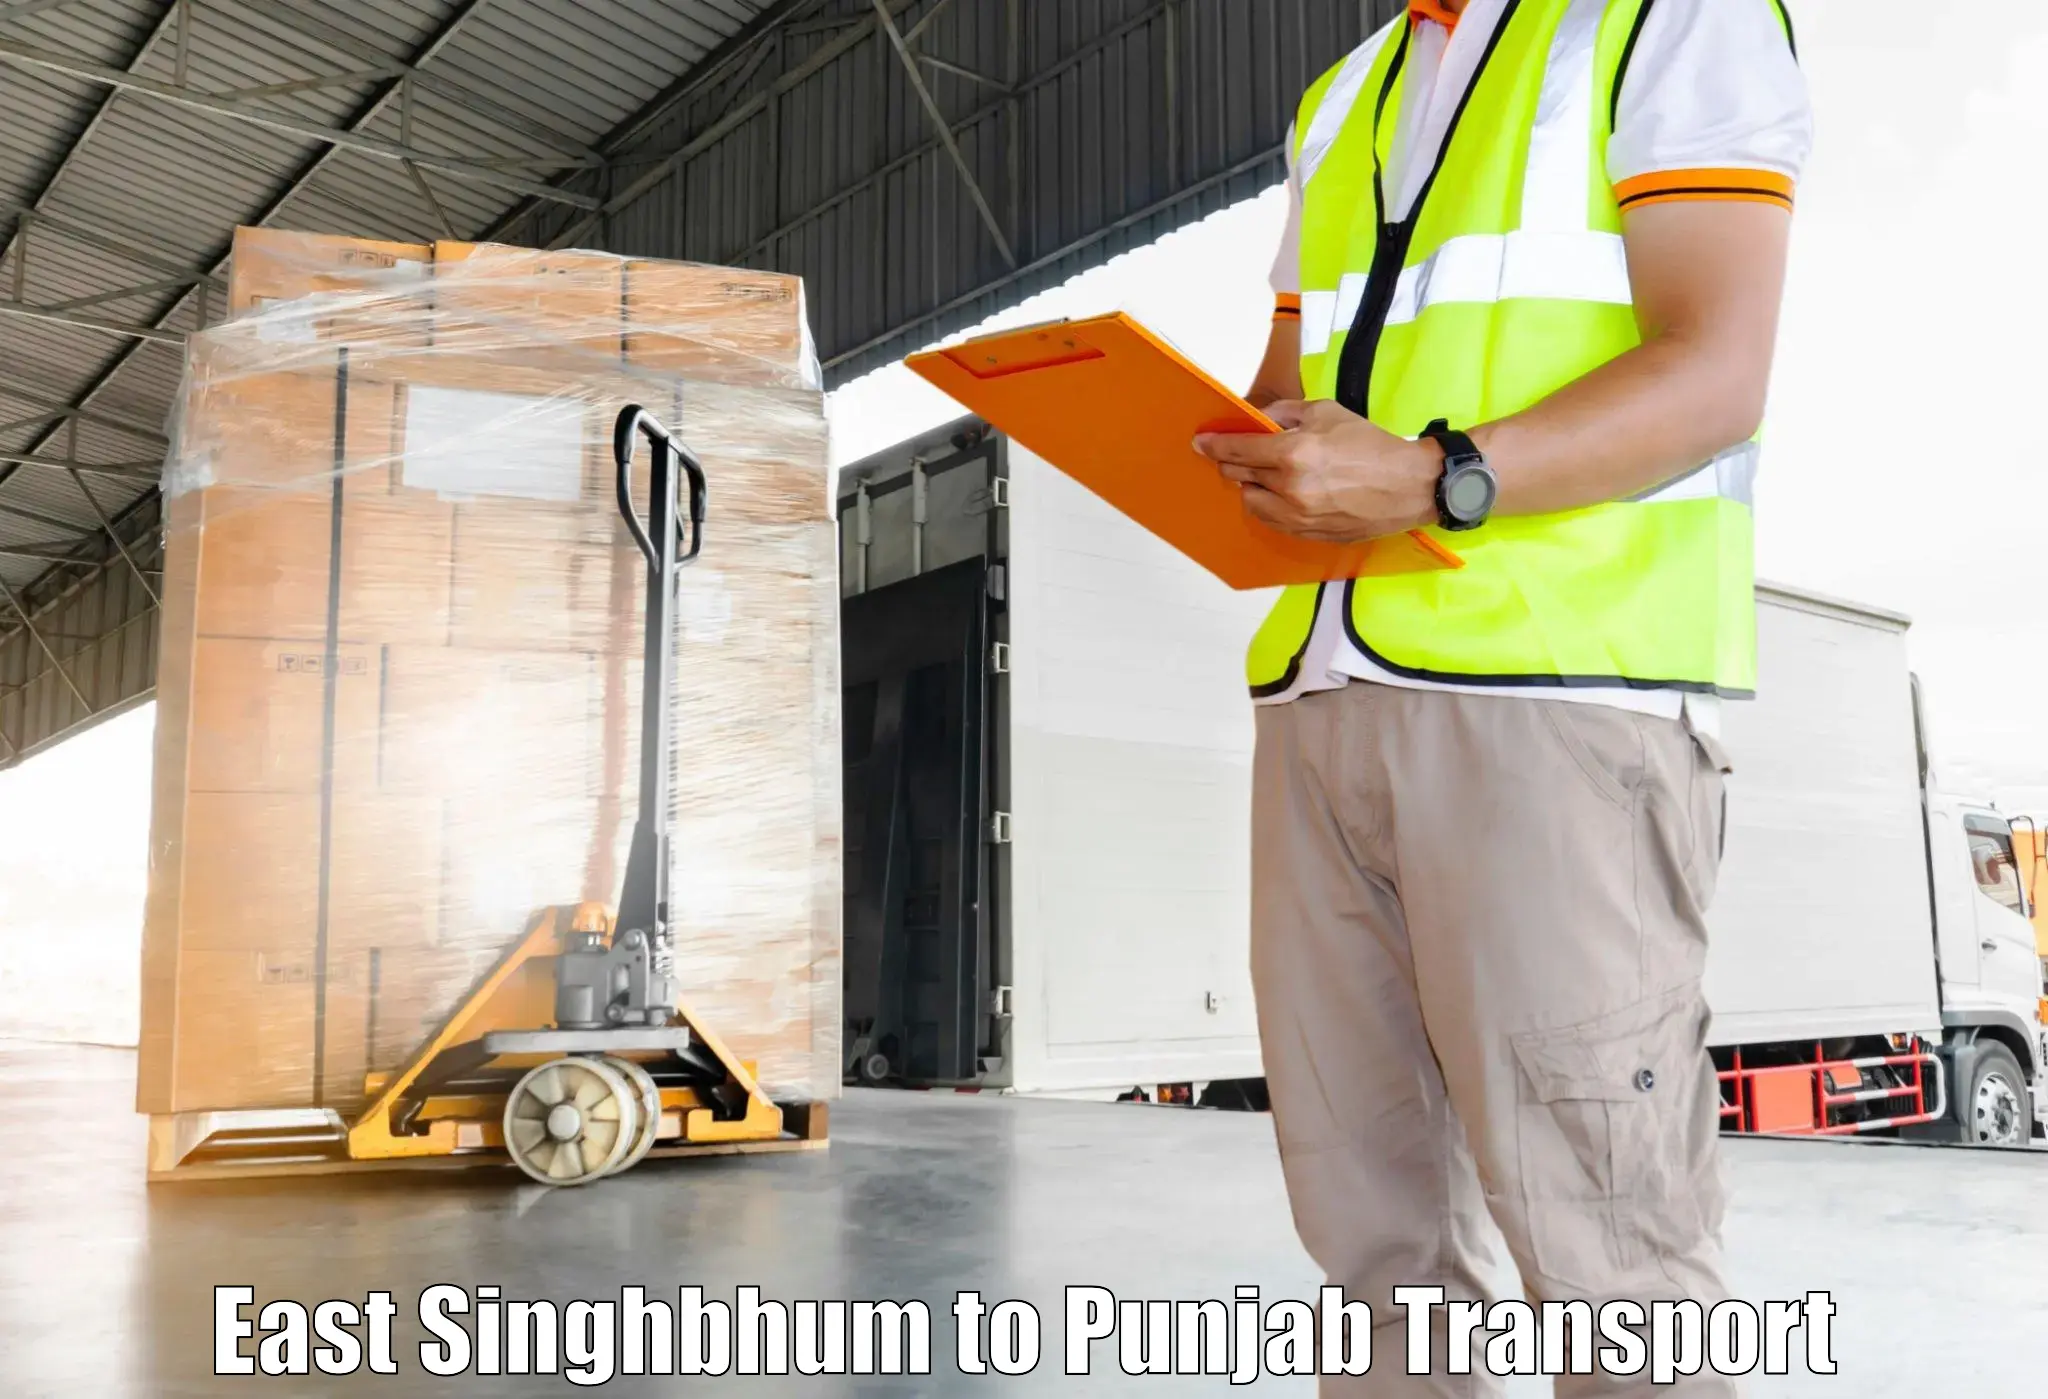 Delivery service East Singhbhum to Garhshankar